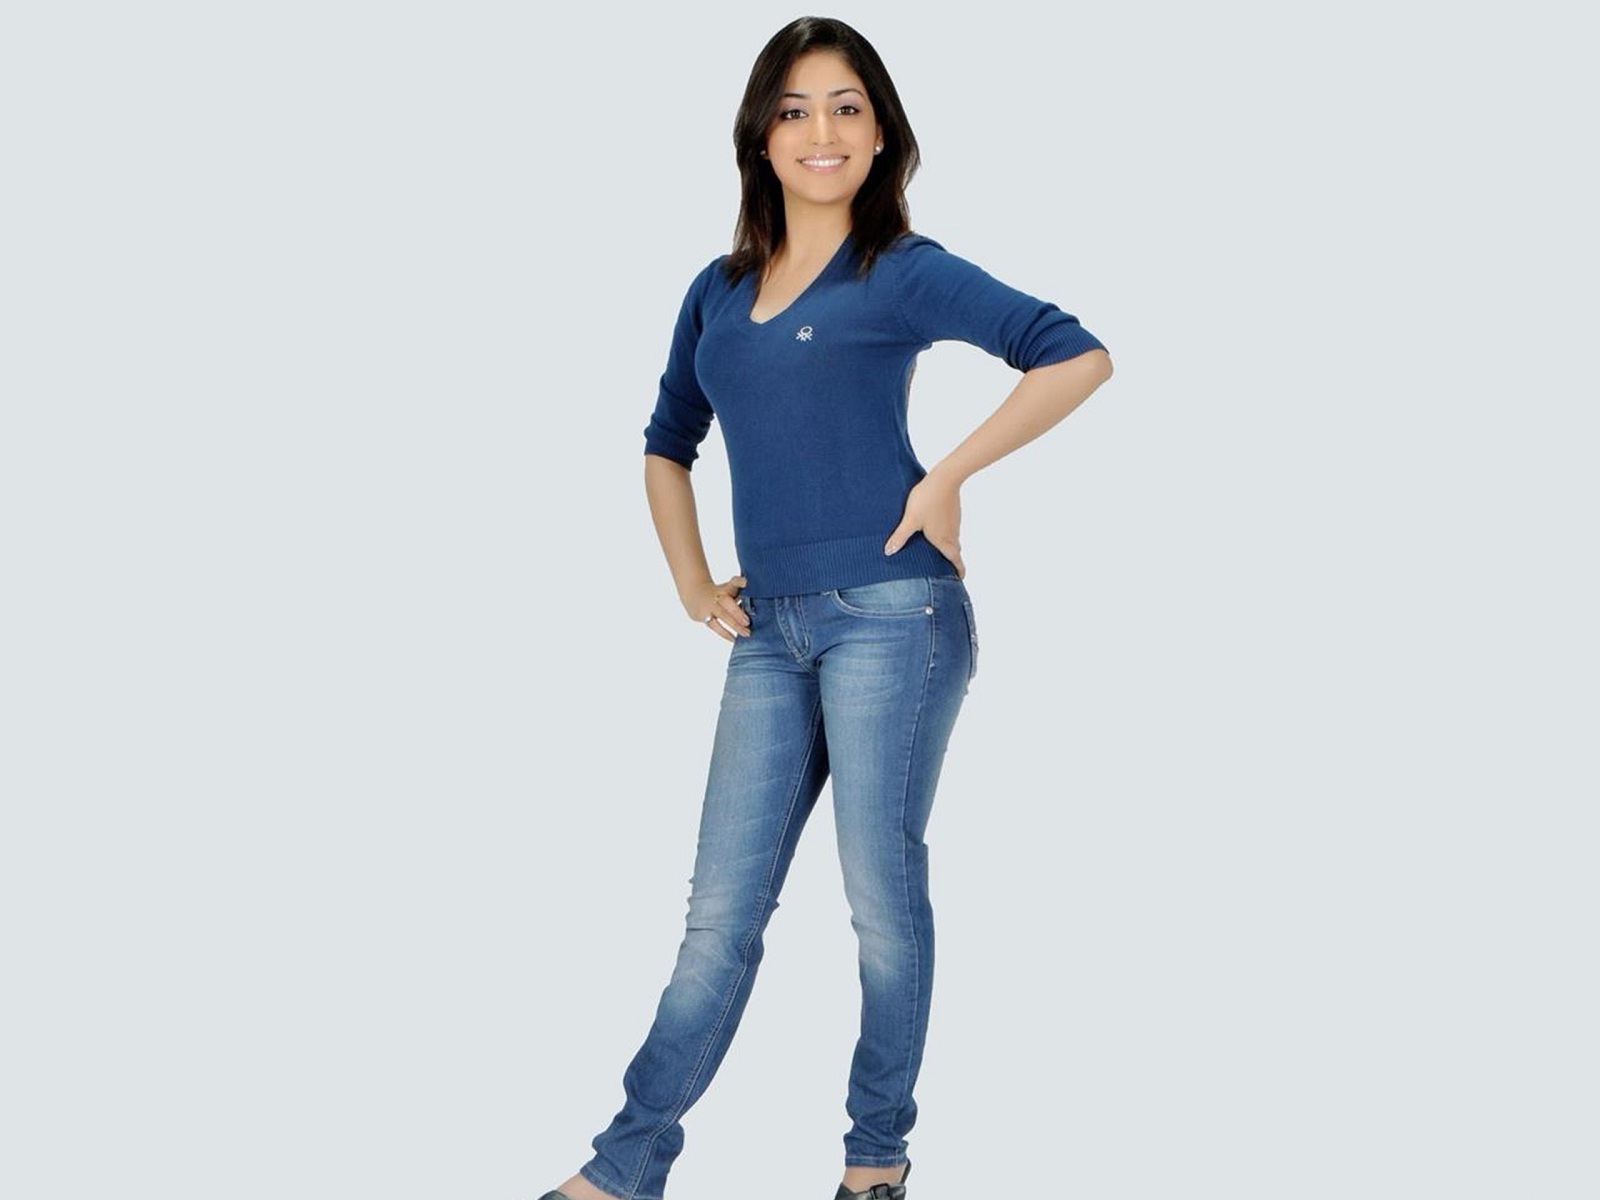 Yami Gautam Hot In Jeans And T Shirt - Yami Gautam , HD Wallpaper & Backgrounds